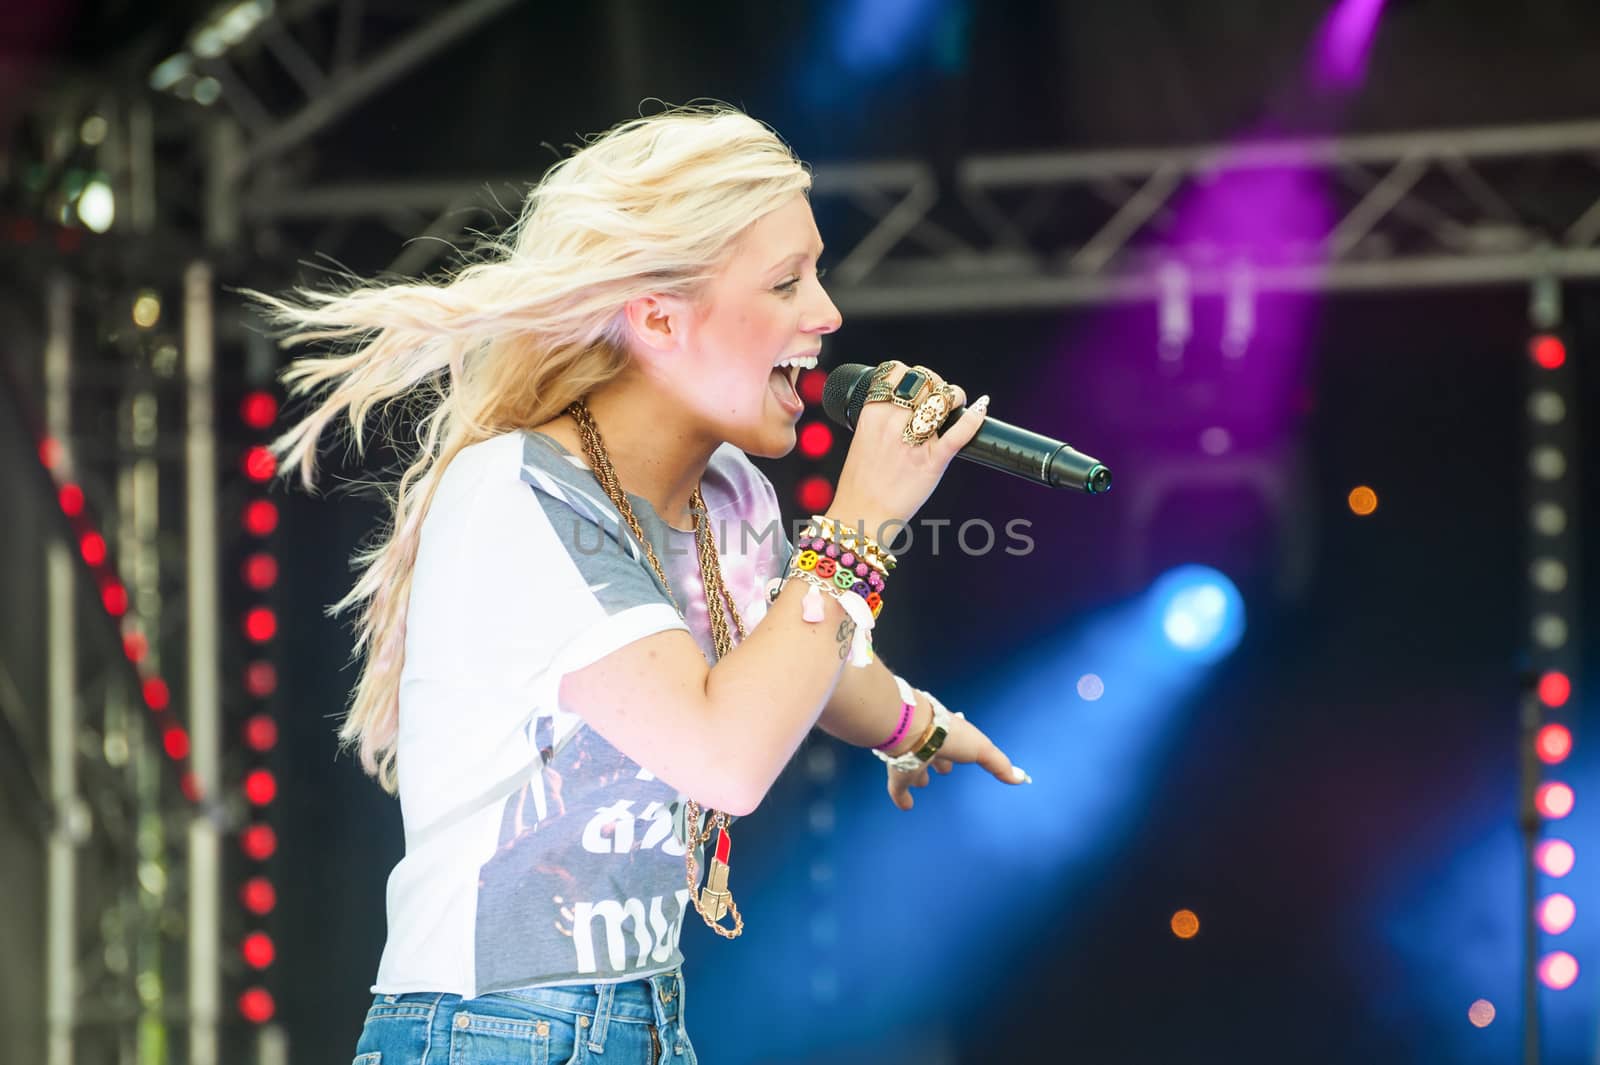 Yateley, UK - June 30, 2012: British pop star Alexa Goddard performing at the GOTG Festival in her home town of Yateley, UK